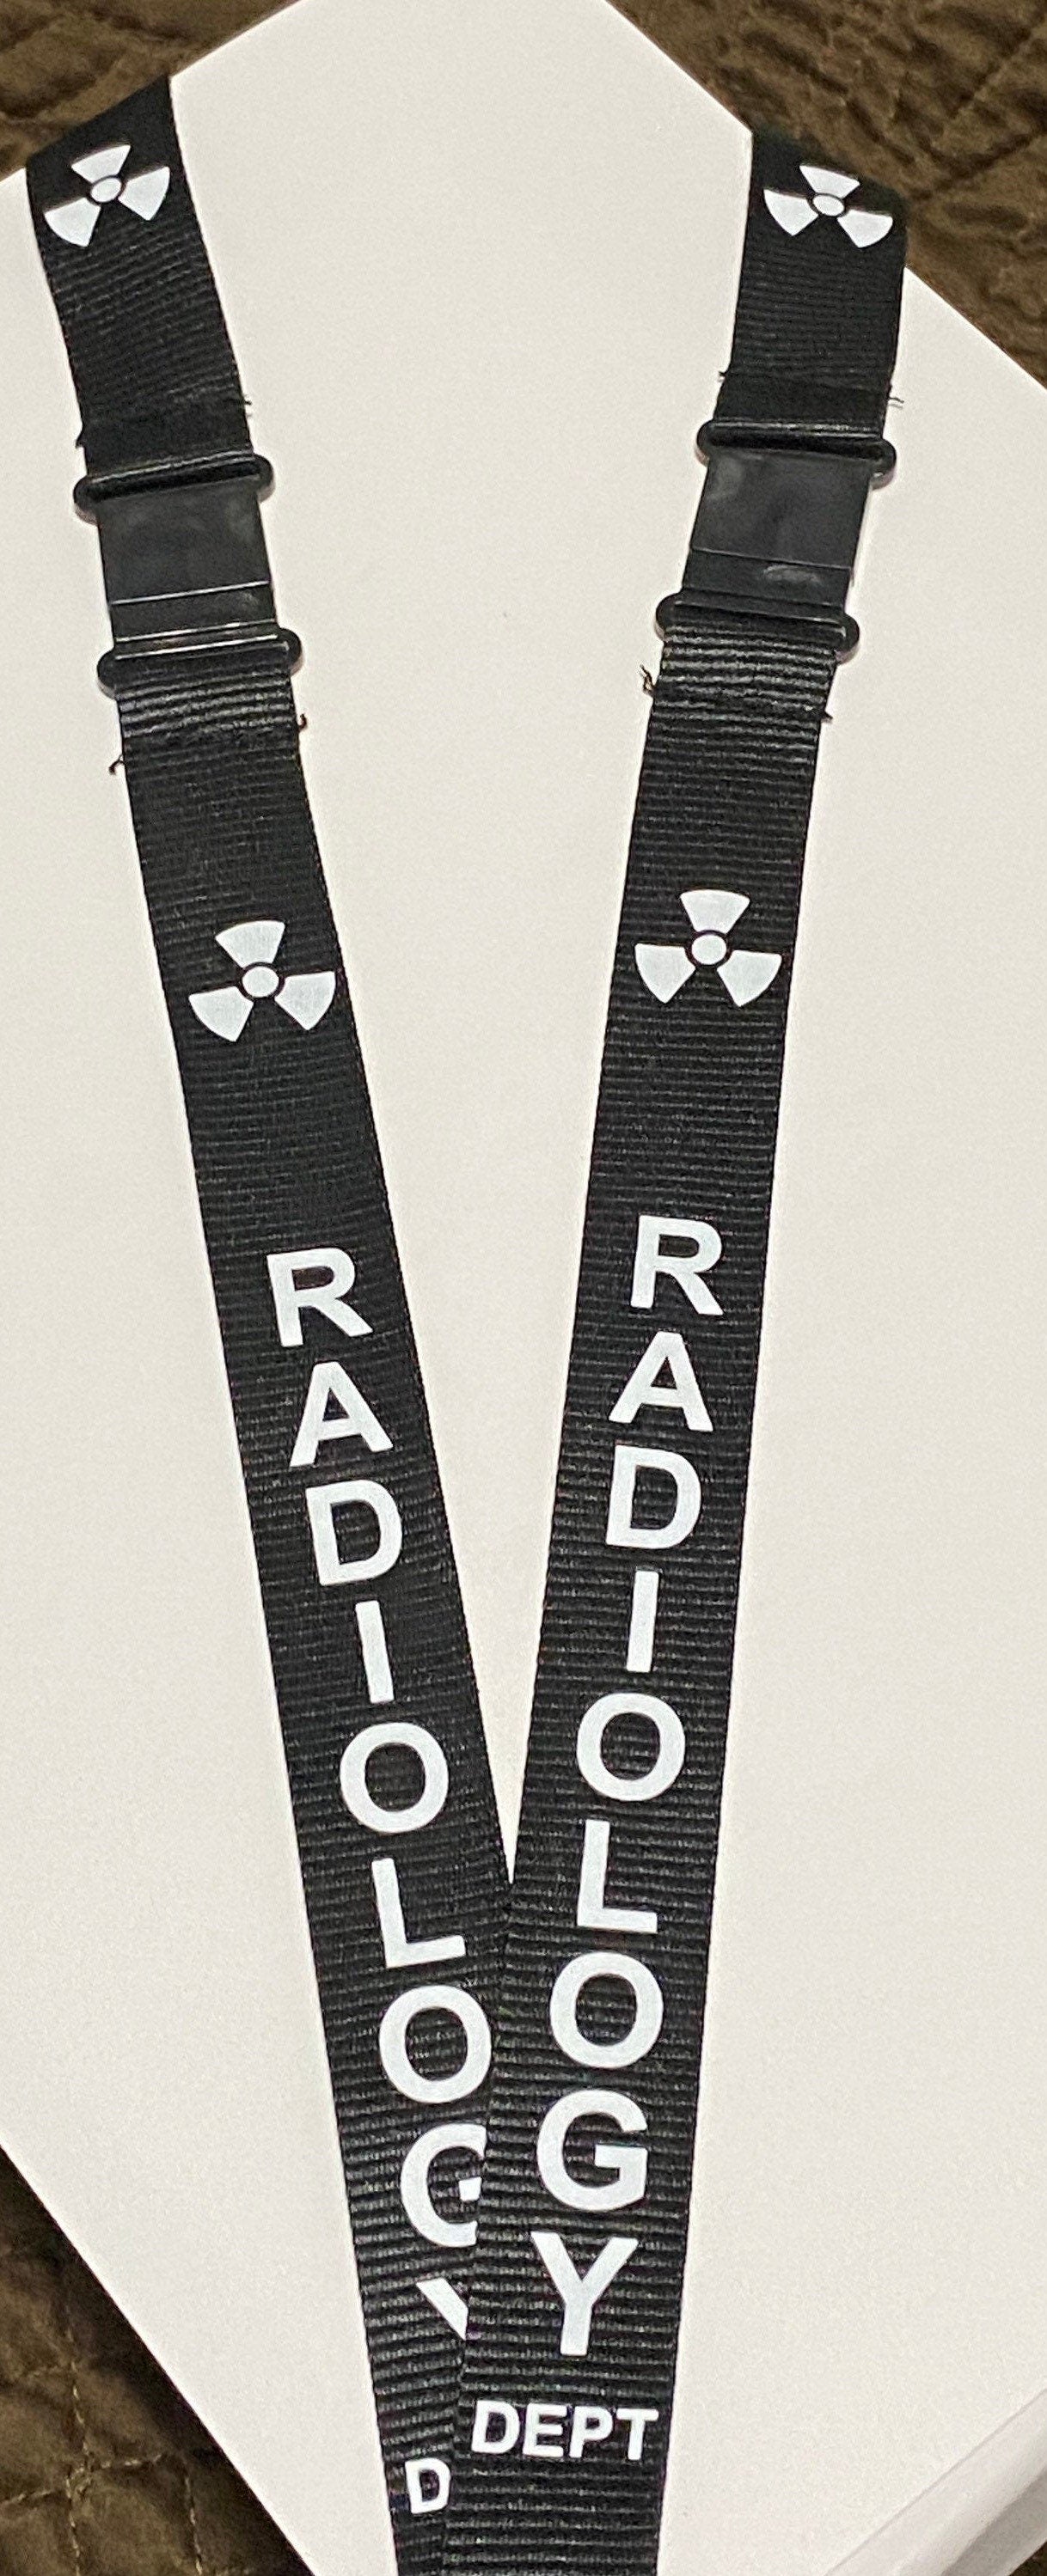 BLACK RADIOLOGY LANYARD, Badge holder/key holder with 2 breakaways, Radiology Gift